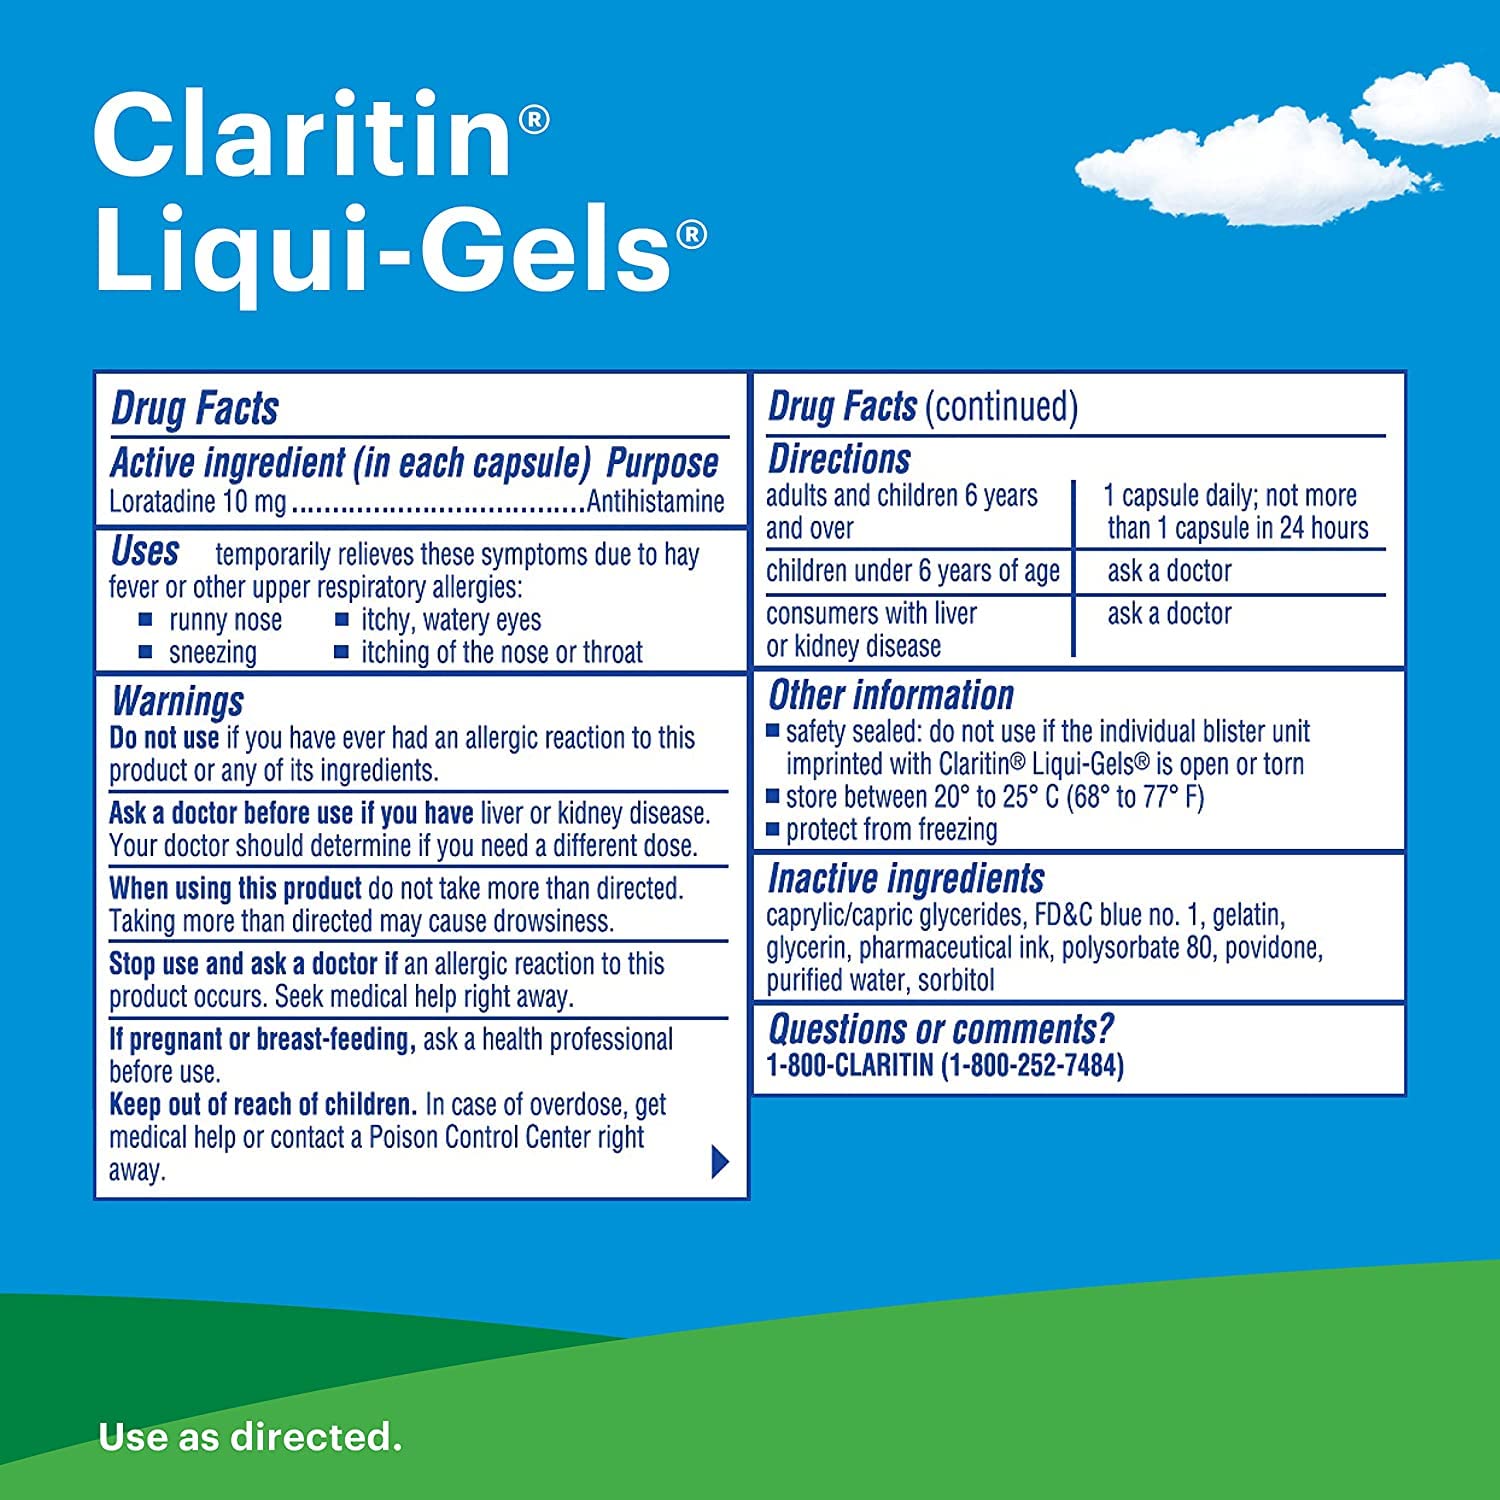 Claritin 24 Hour Allergy Medicine, Non-Drowsy Prescription Strength Allergy Relief, Loratadine Antihistamine Liqui-Gels, 1x30, 1x10, 1x60, 100 Total Liqui-Gels